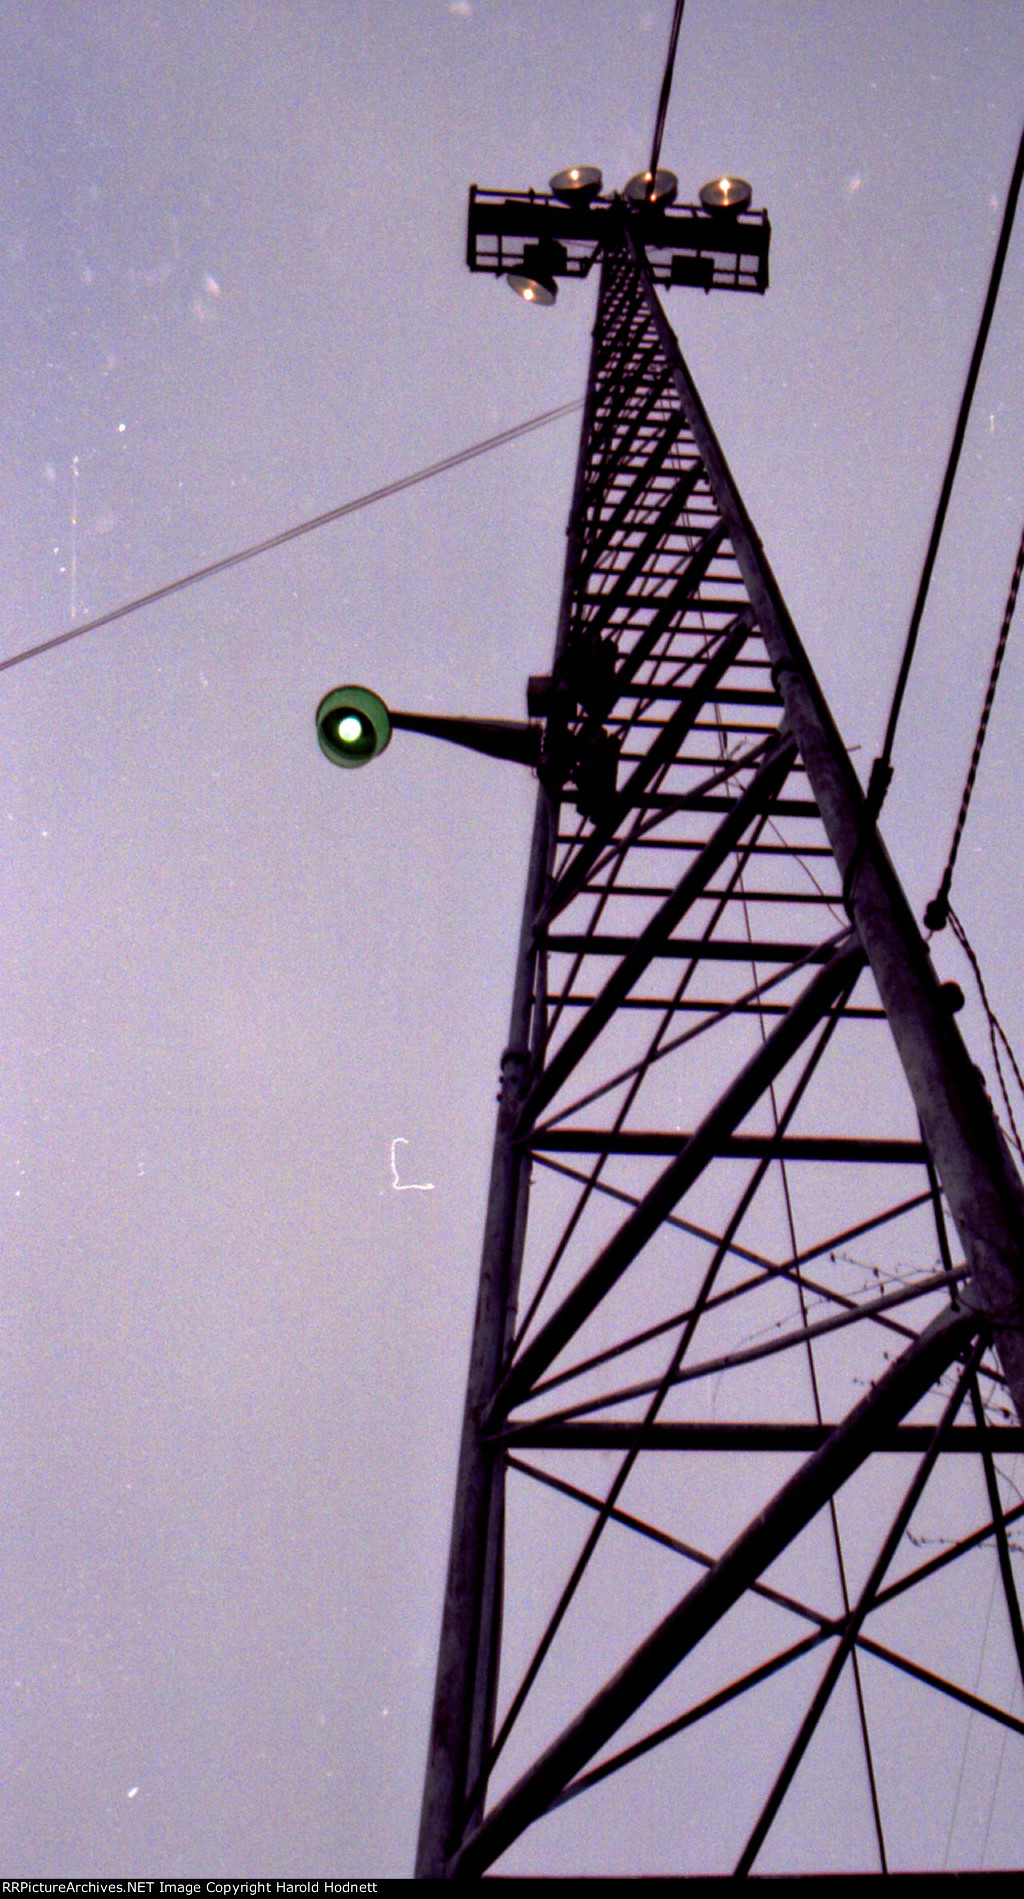 The yard light tower in NS Glenwood yard